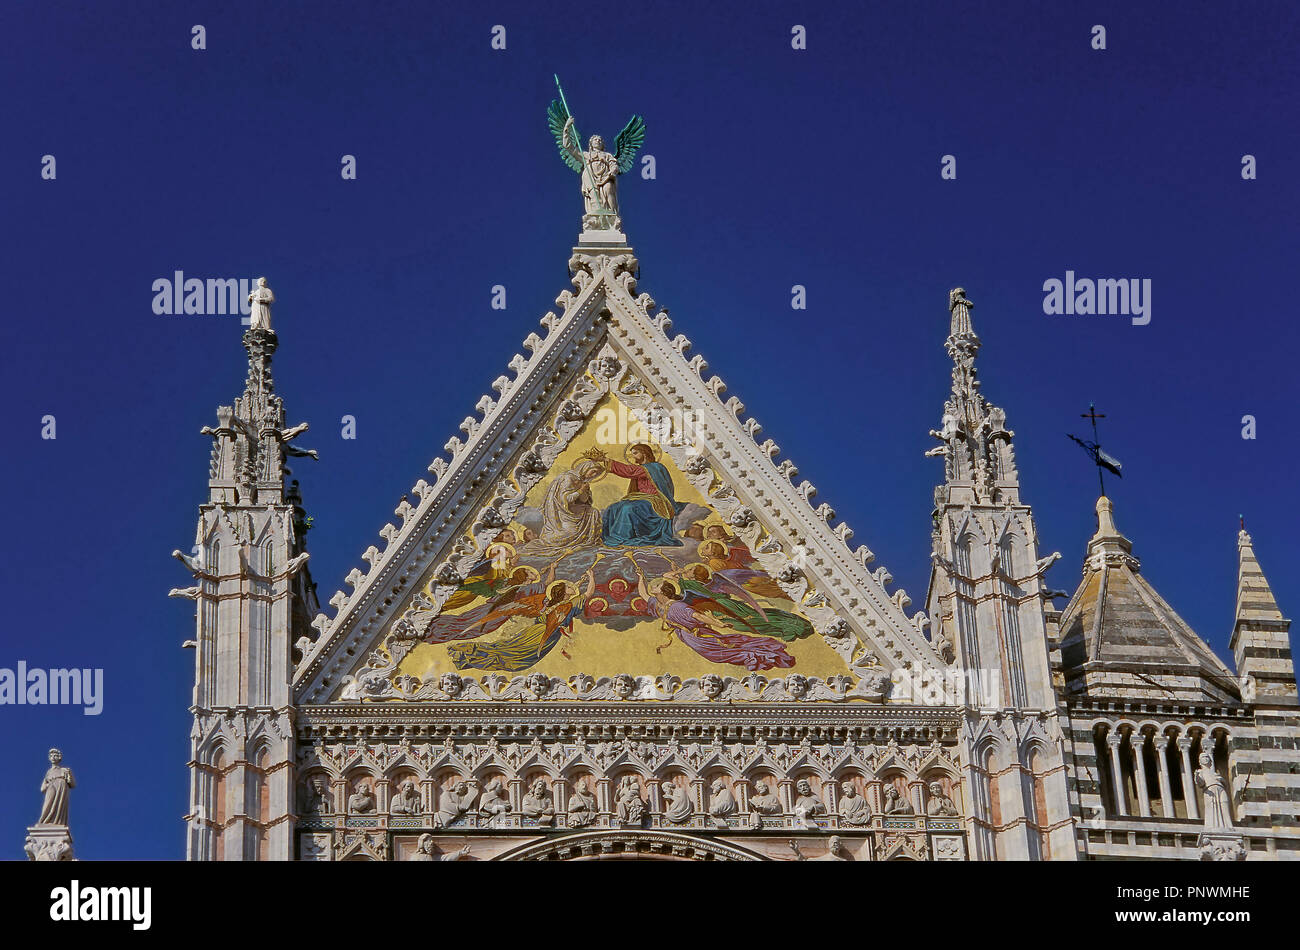 Cathedral of Santa Maria de la Asuncion. Venetian gold mosaic on the main pediment of the façade (Coronation of the Virgin by Luigi Mussini). Siena. I Stock Photo